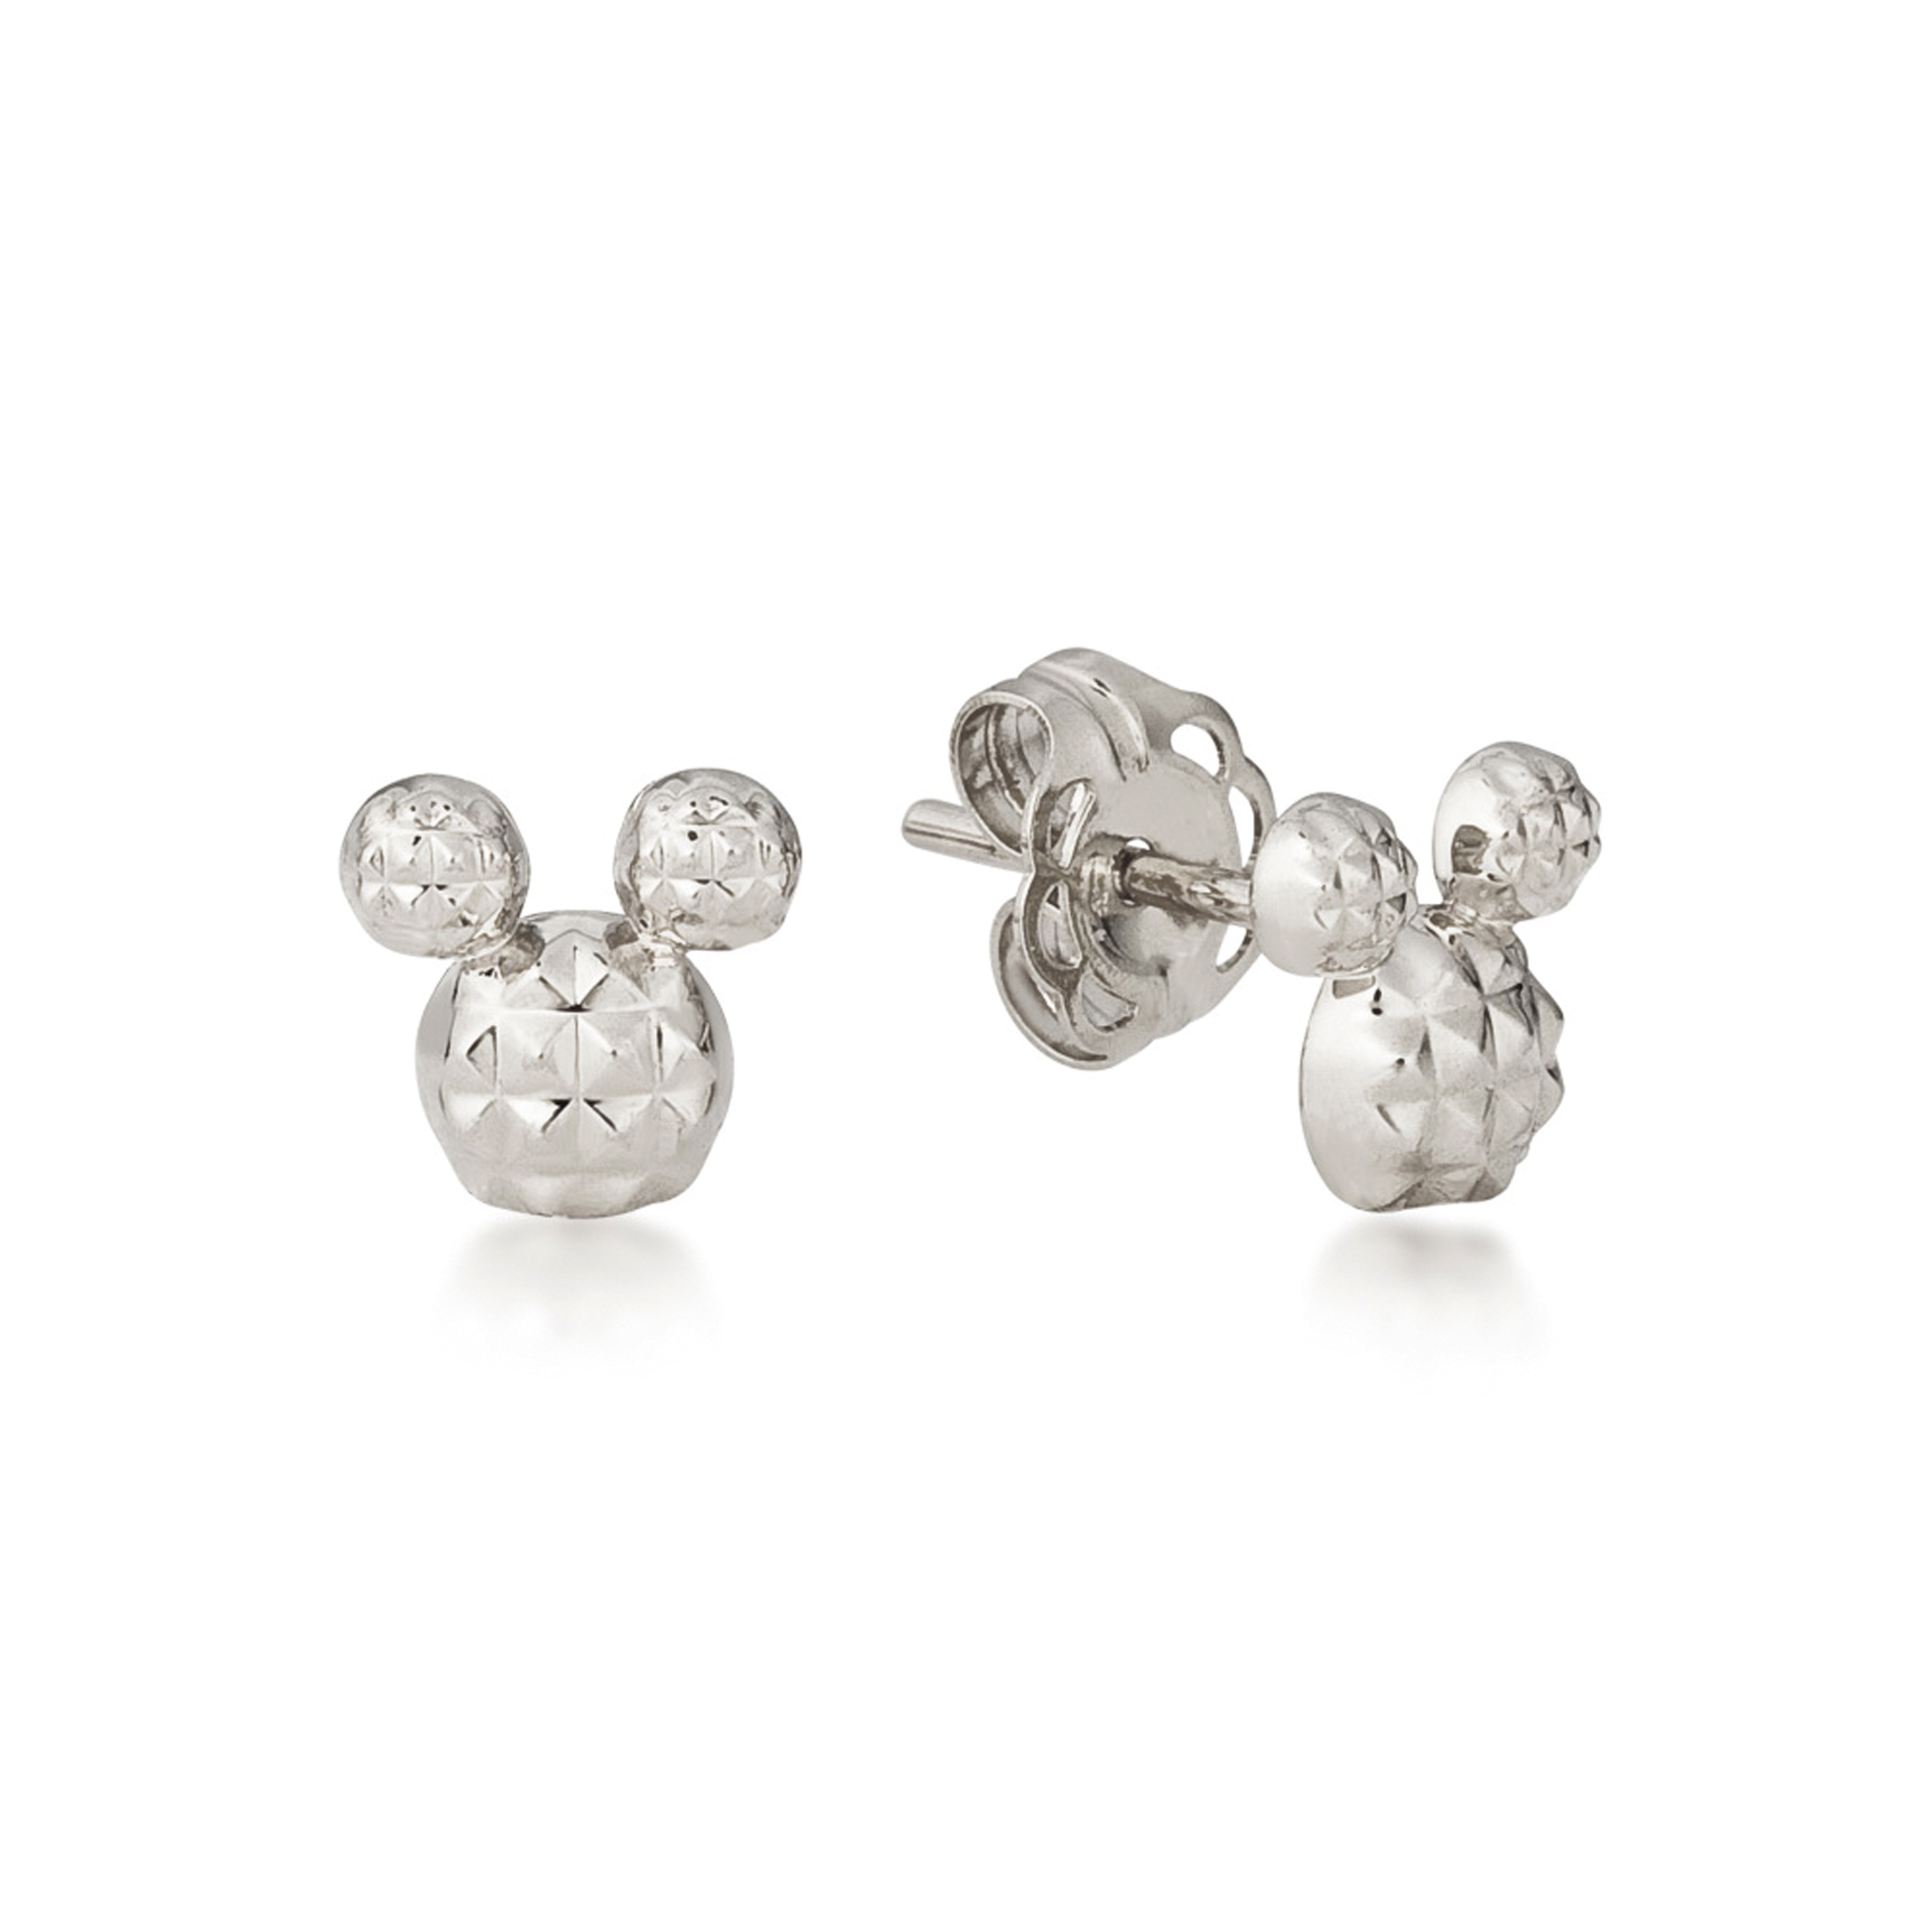 Disney Micky Maus - Ohrstecker Diamond Cut Silber Couture Kingdom